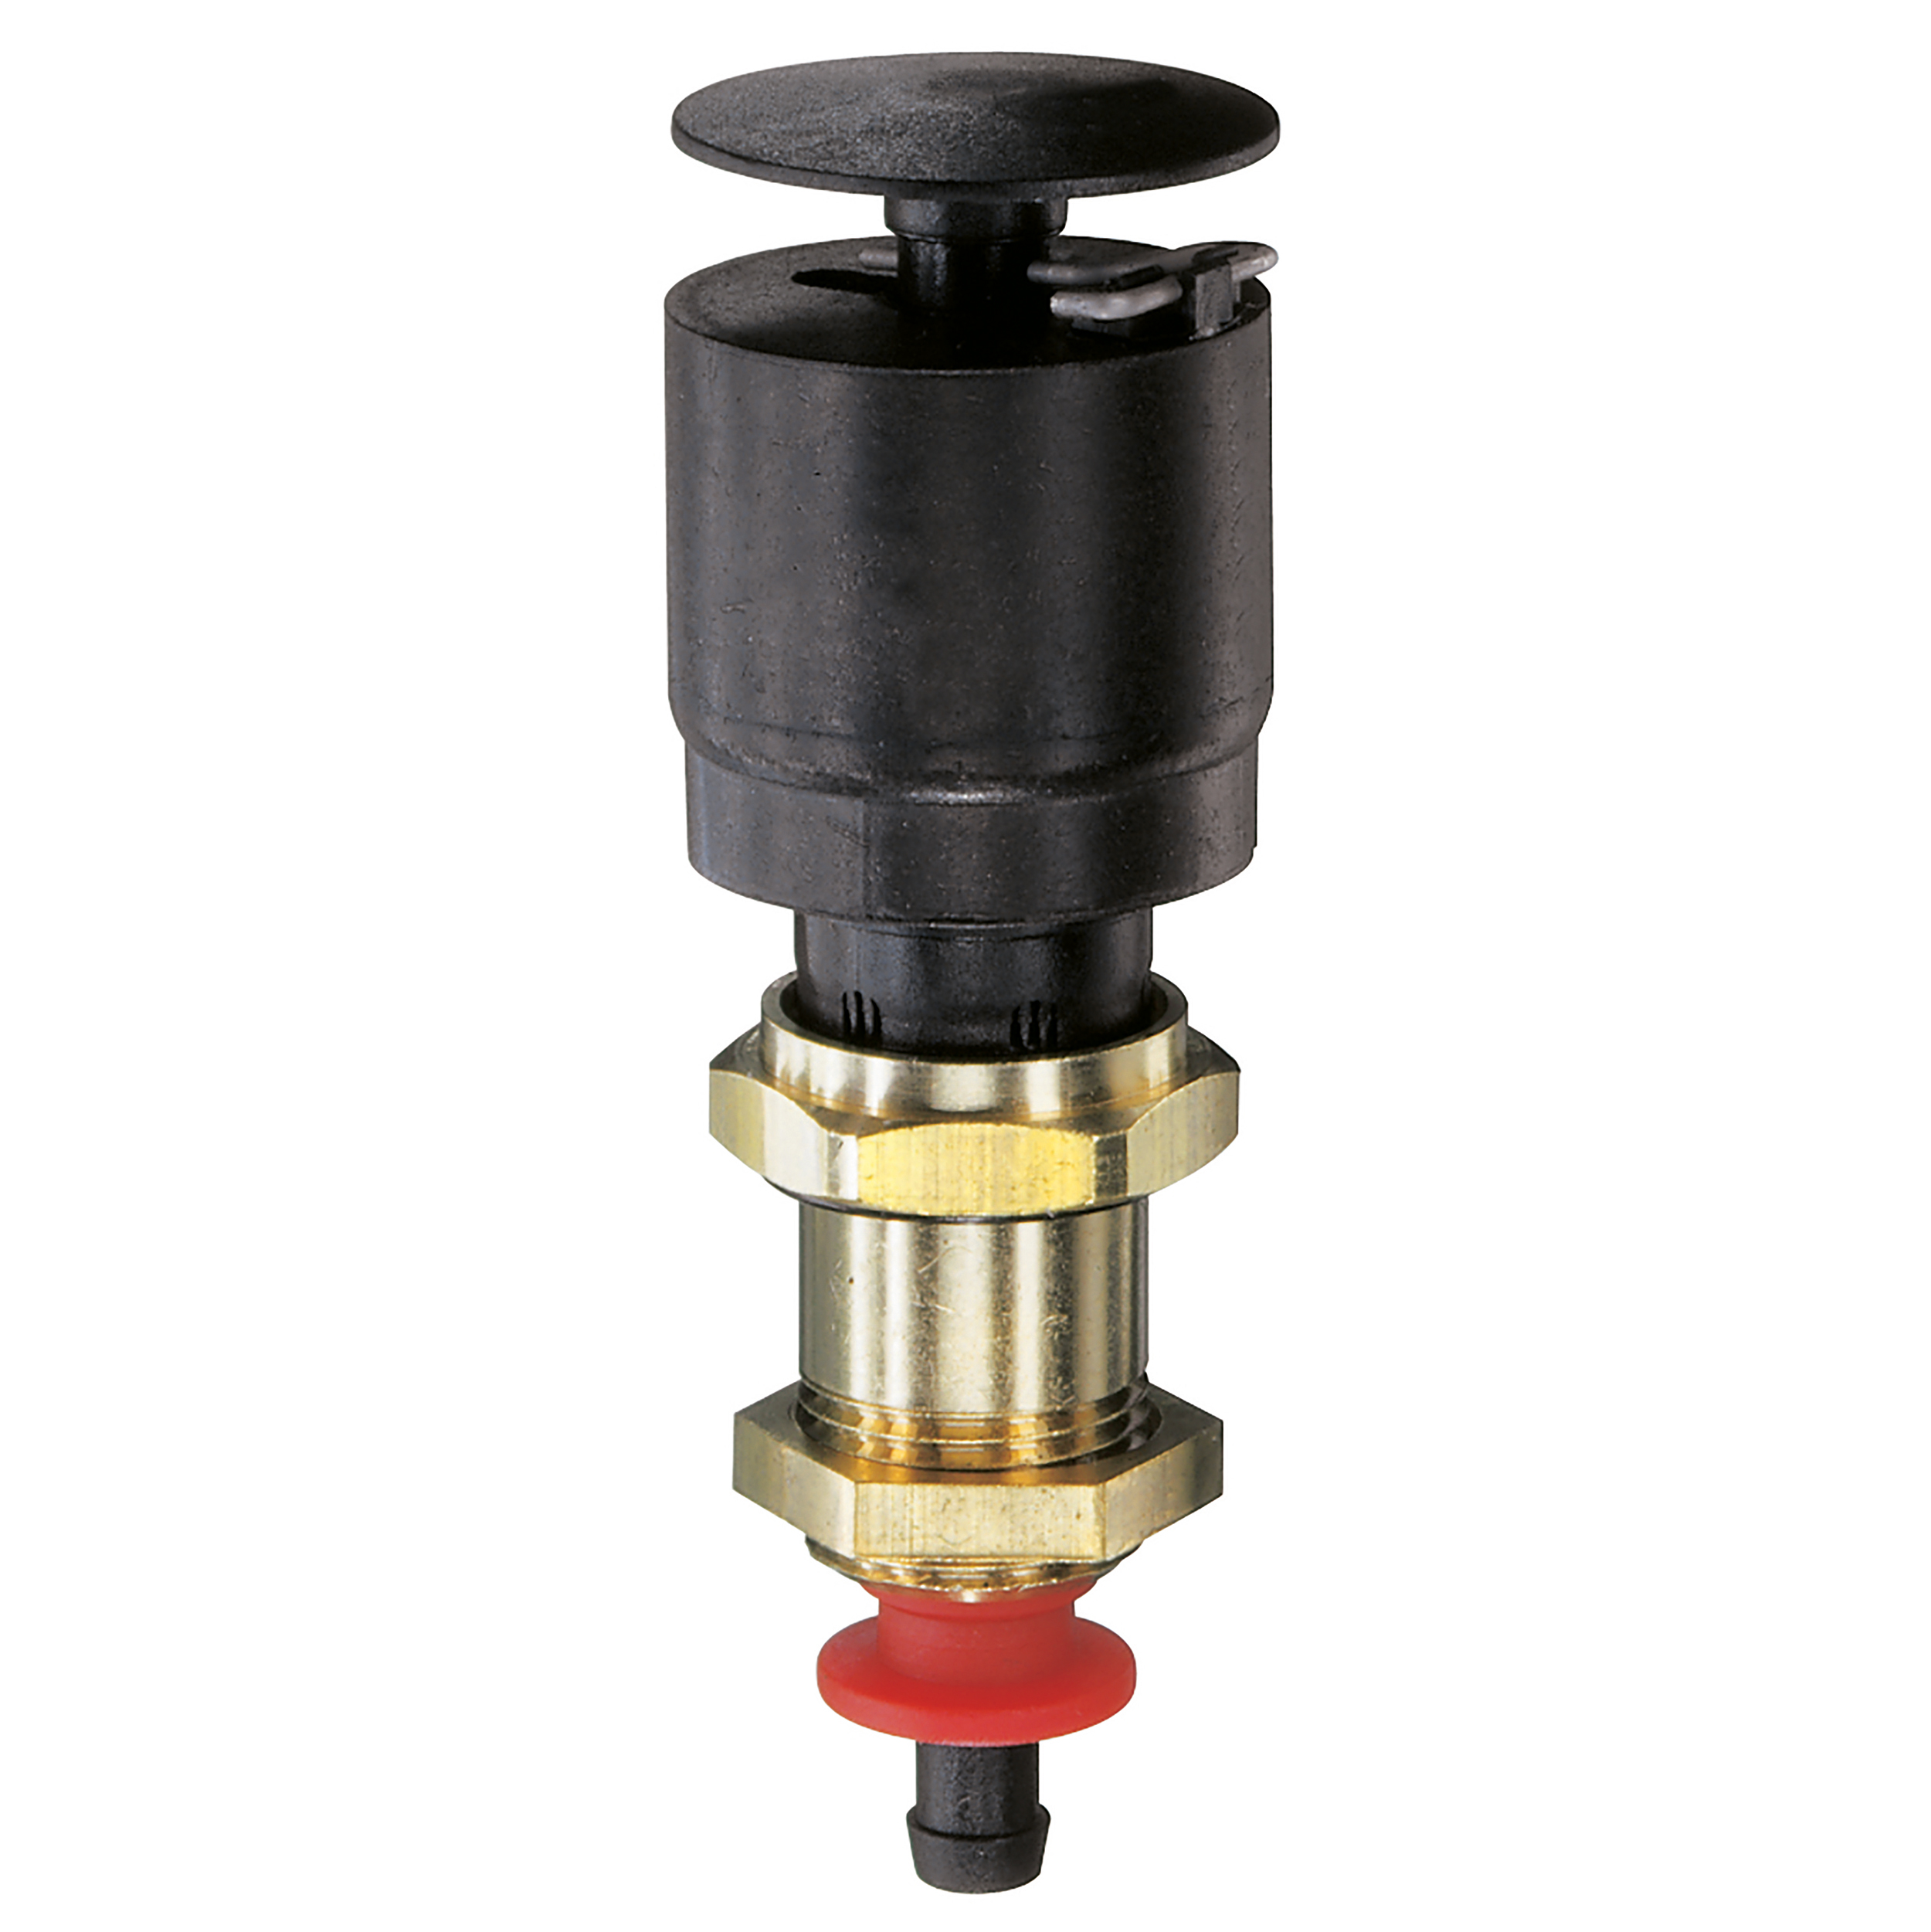 Automatic integrated drain valve, Ø24, length: 69 mm, connection: Ø14, condensate drain: DN 4, drain hose: DN 5 flexible